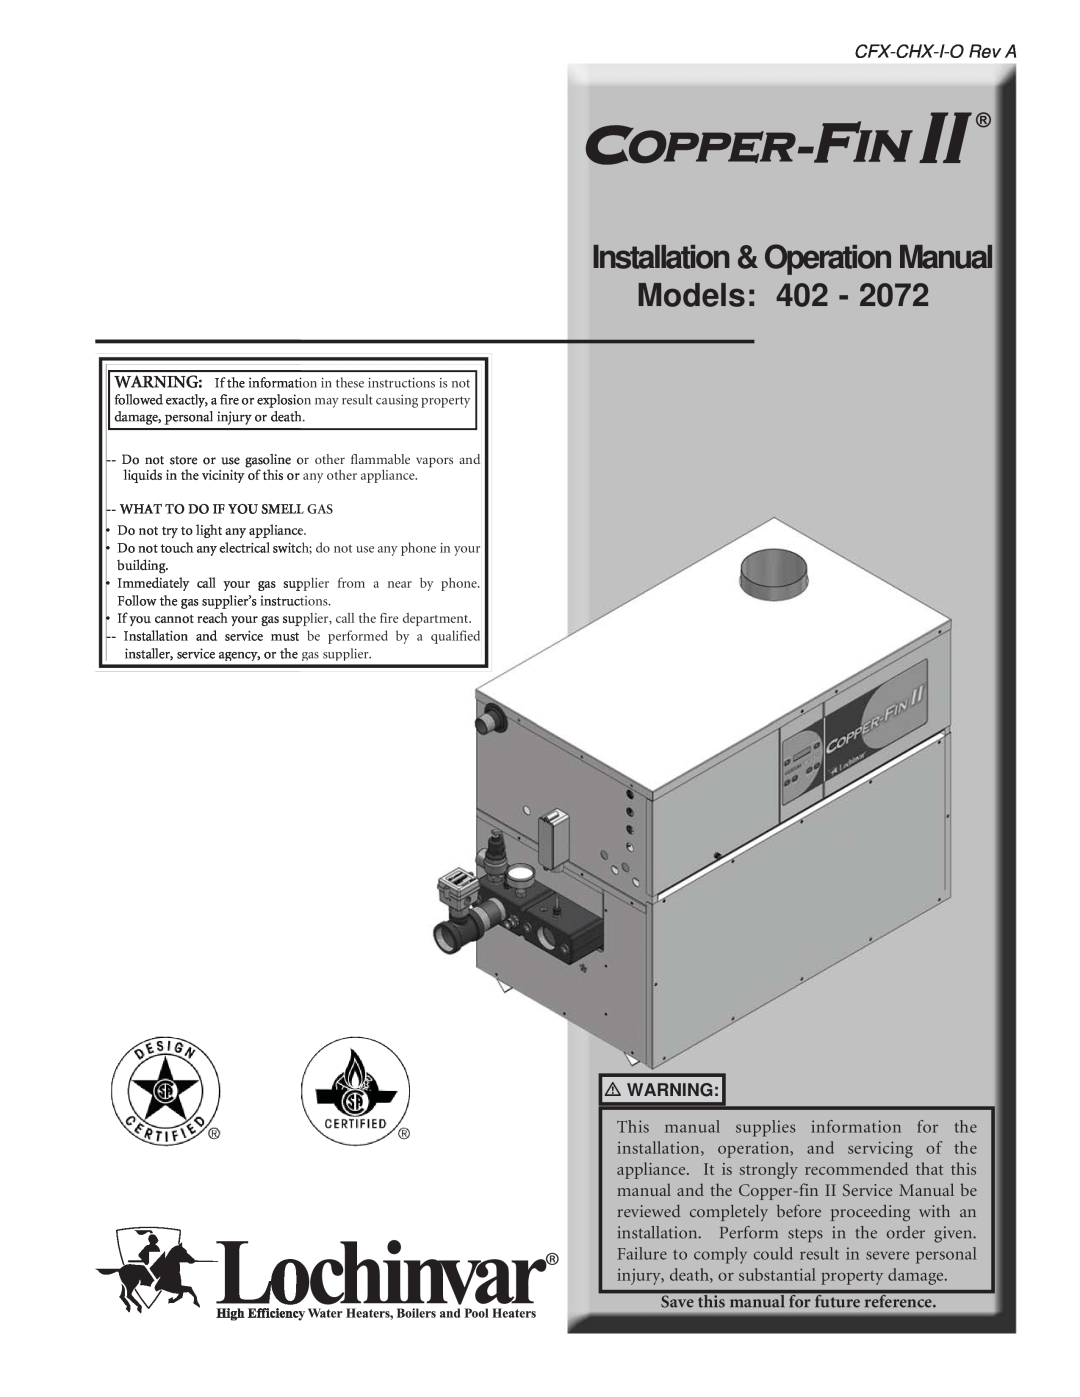 Lochinvar 402 - 2072 operation manual CFX-CHX-I-ORev A, Installation & Operation Manual Models: 402 